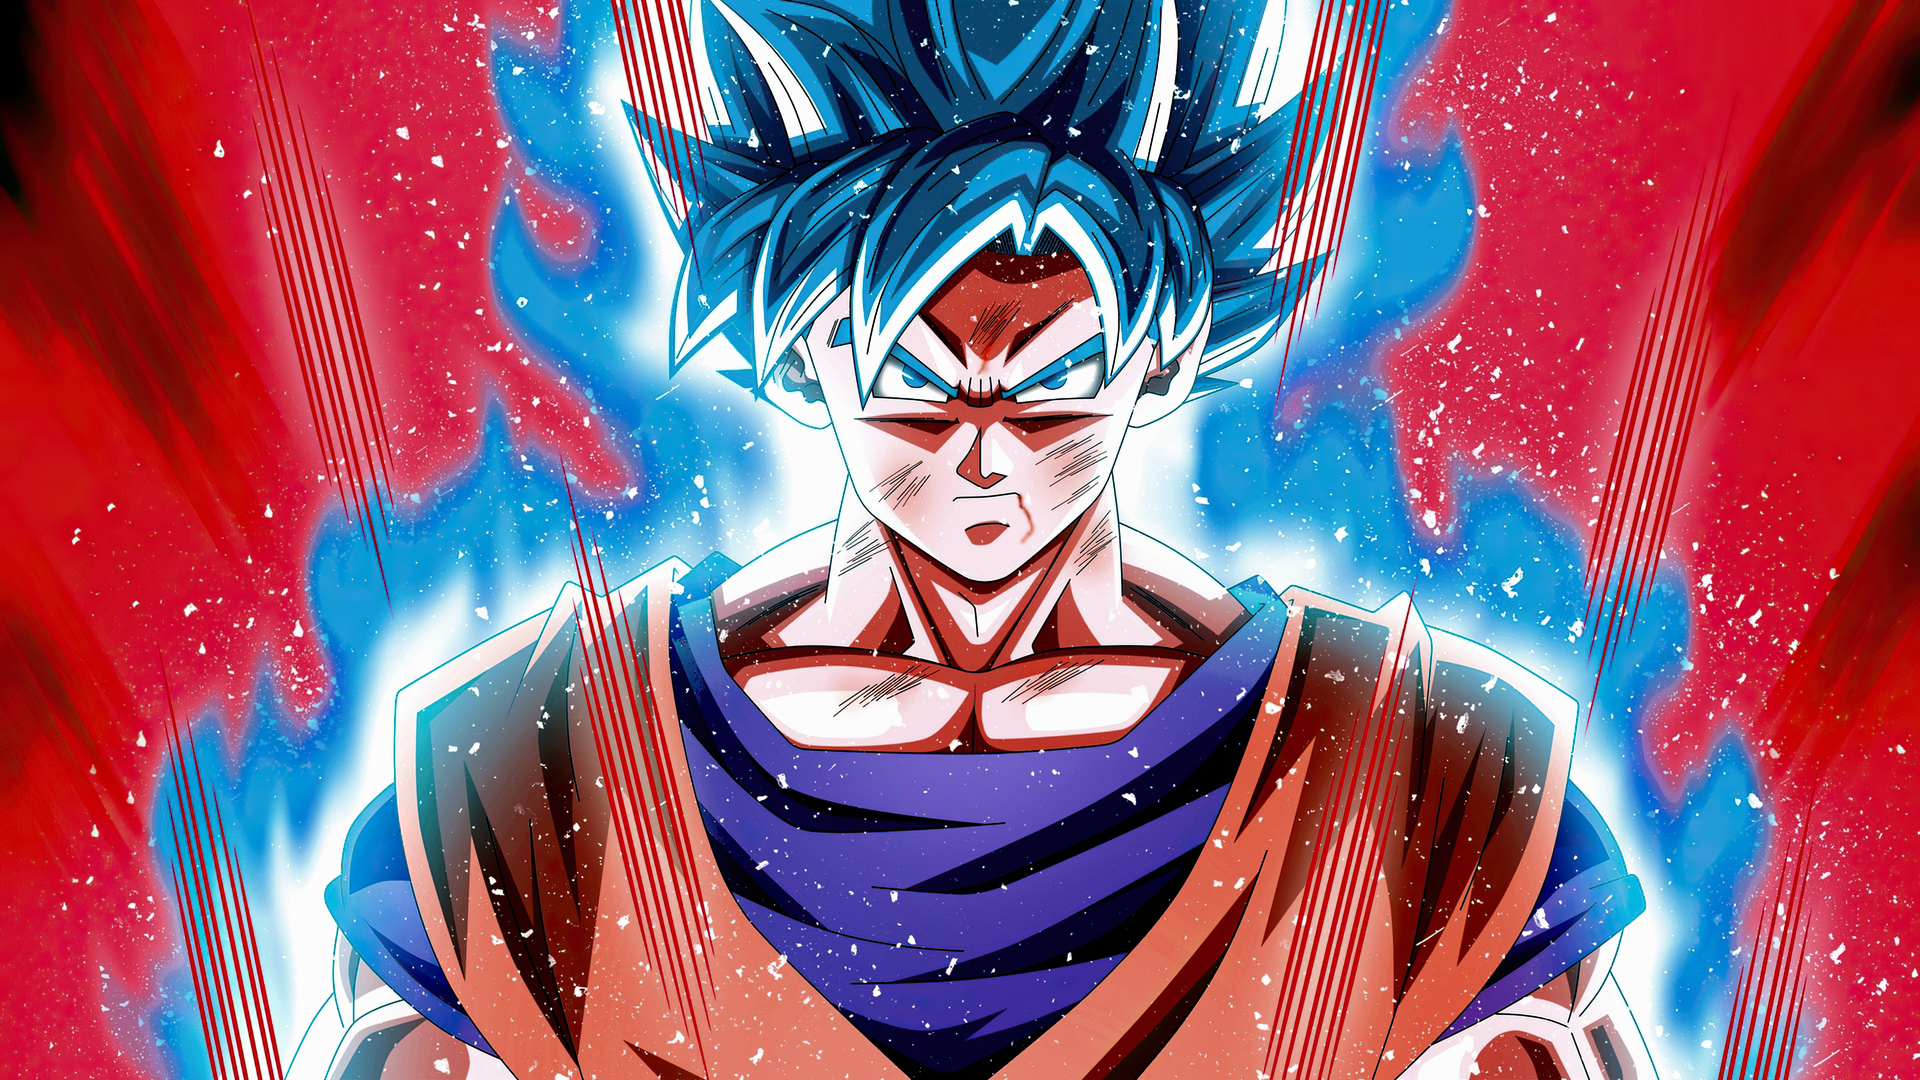 Dragon Ball HD Goku Super Saiyan Blue Wallpaper, HD Anime 4K Wallpapers,  Images, Photos and Background - Wallpapers Den